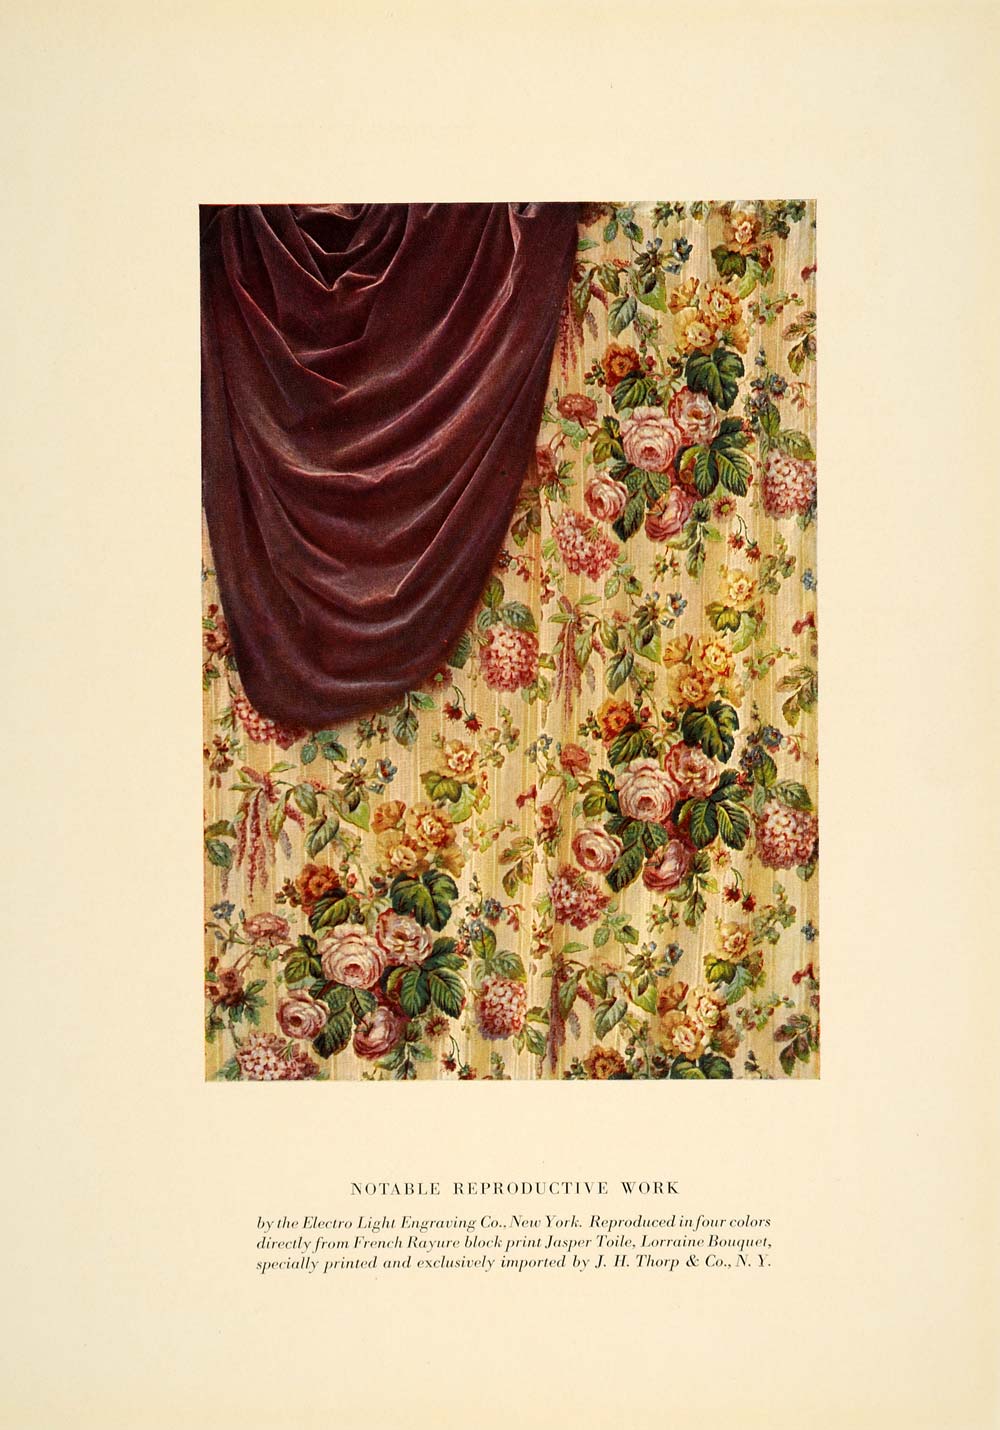 1913 French Rayure Block Print Jasper Toile Fabric - ORIGINAL PA1